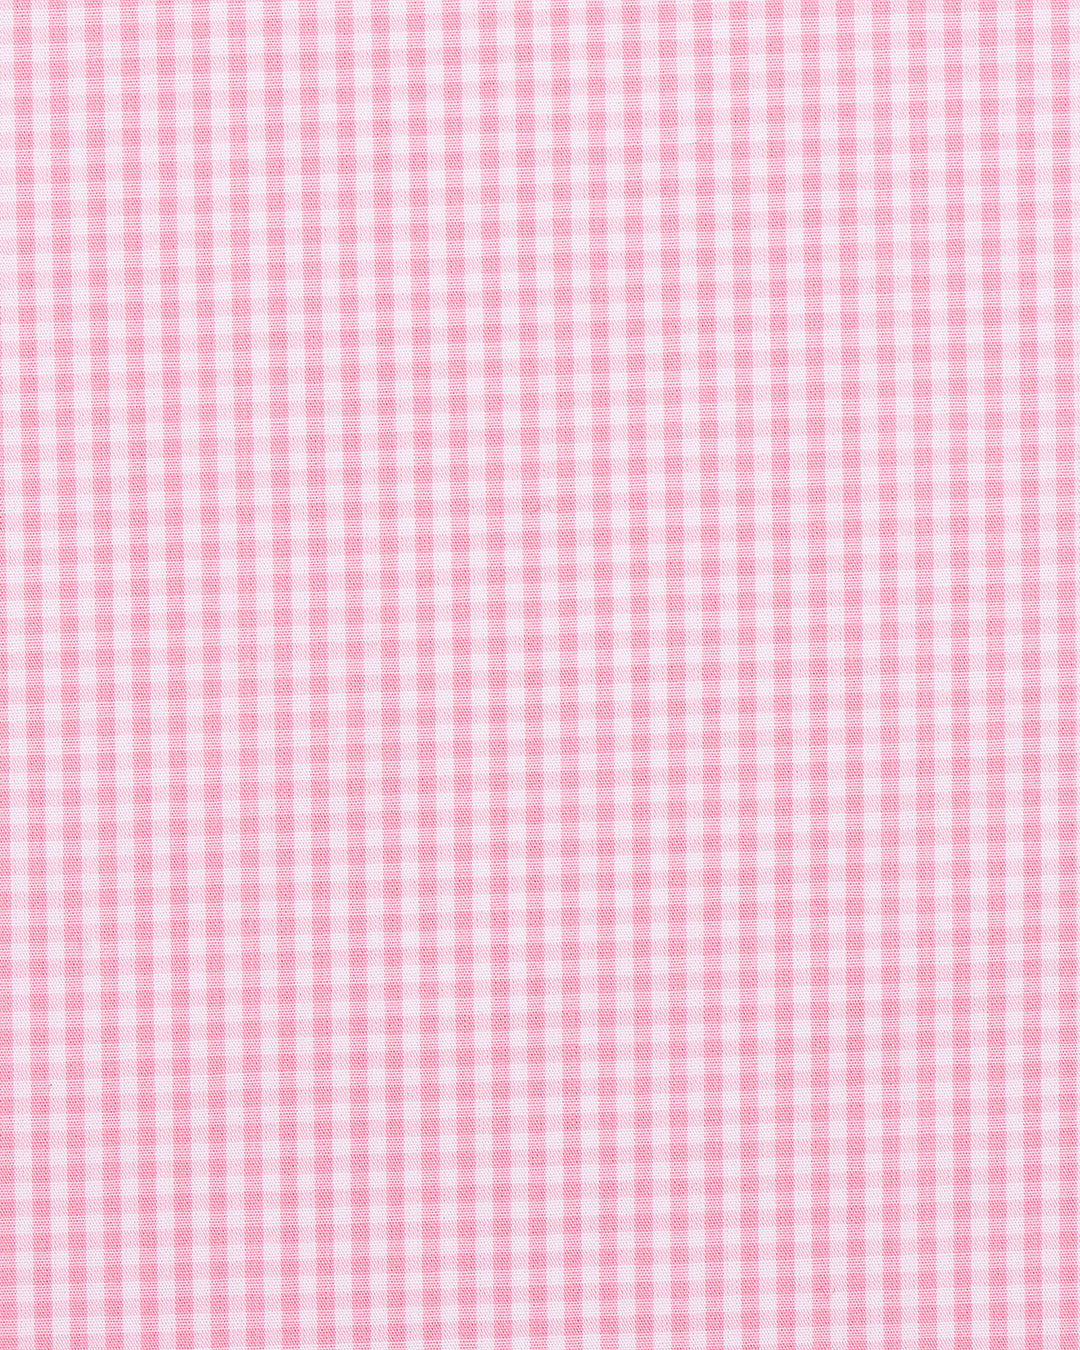 Pink White Gingham